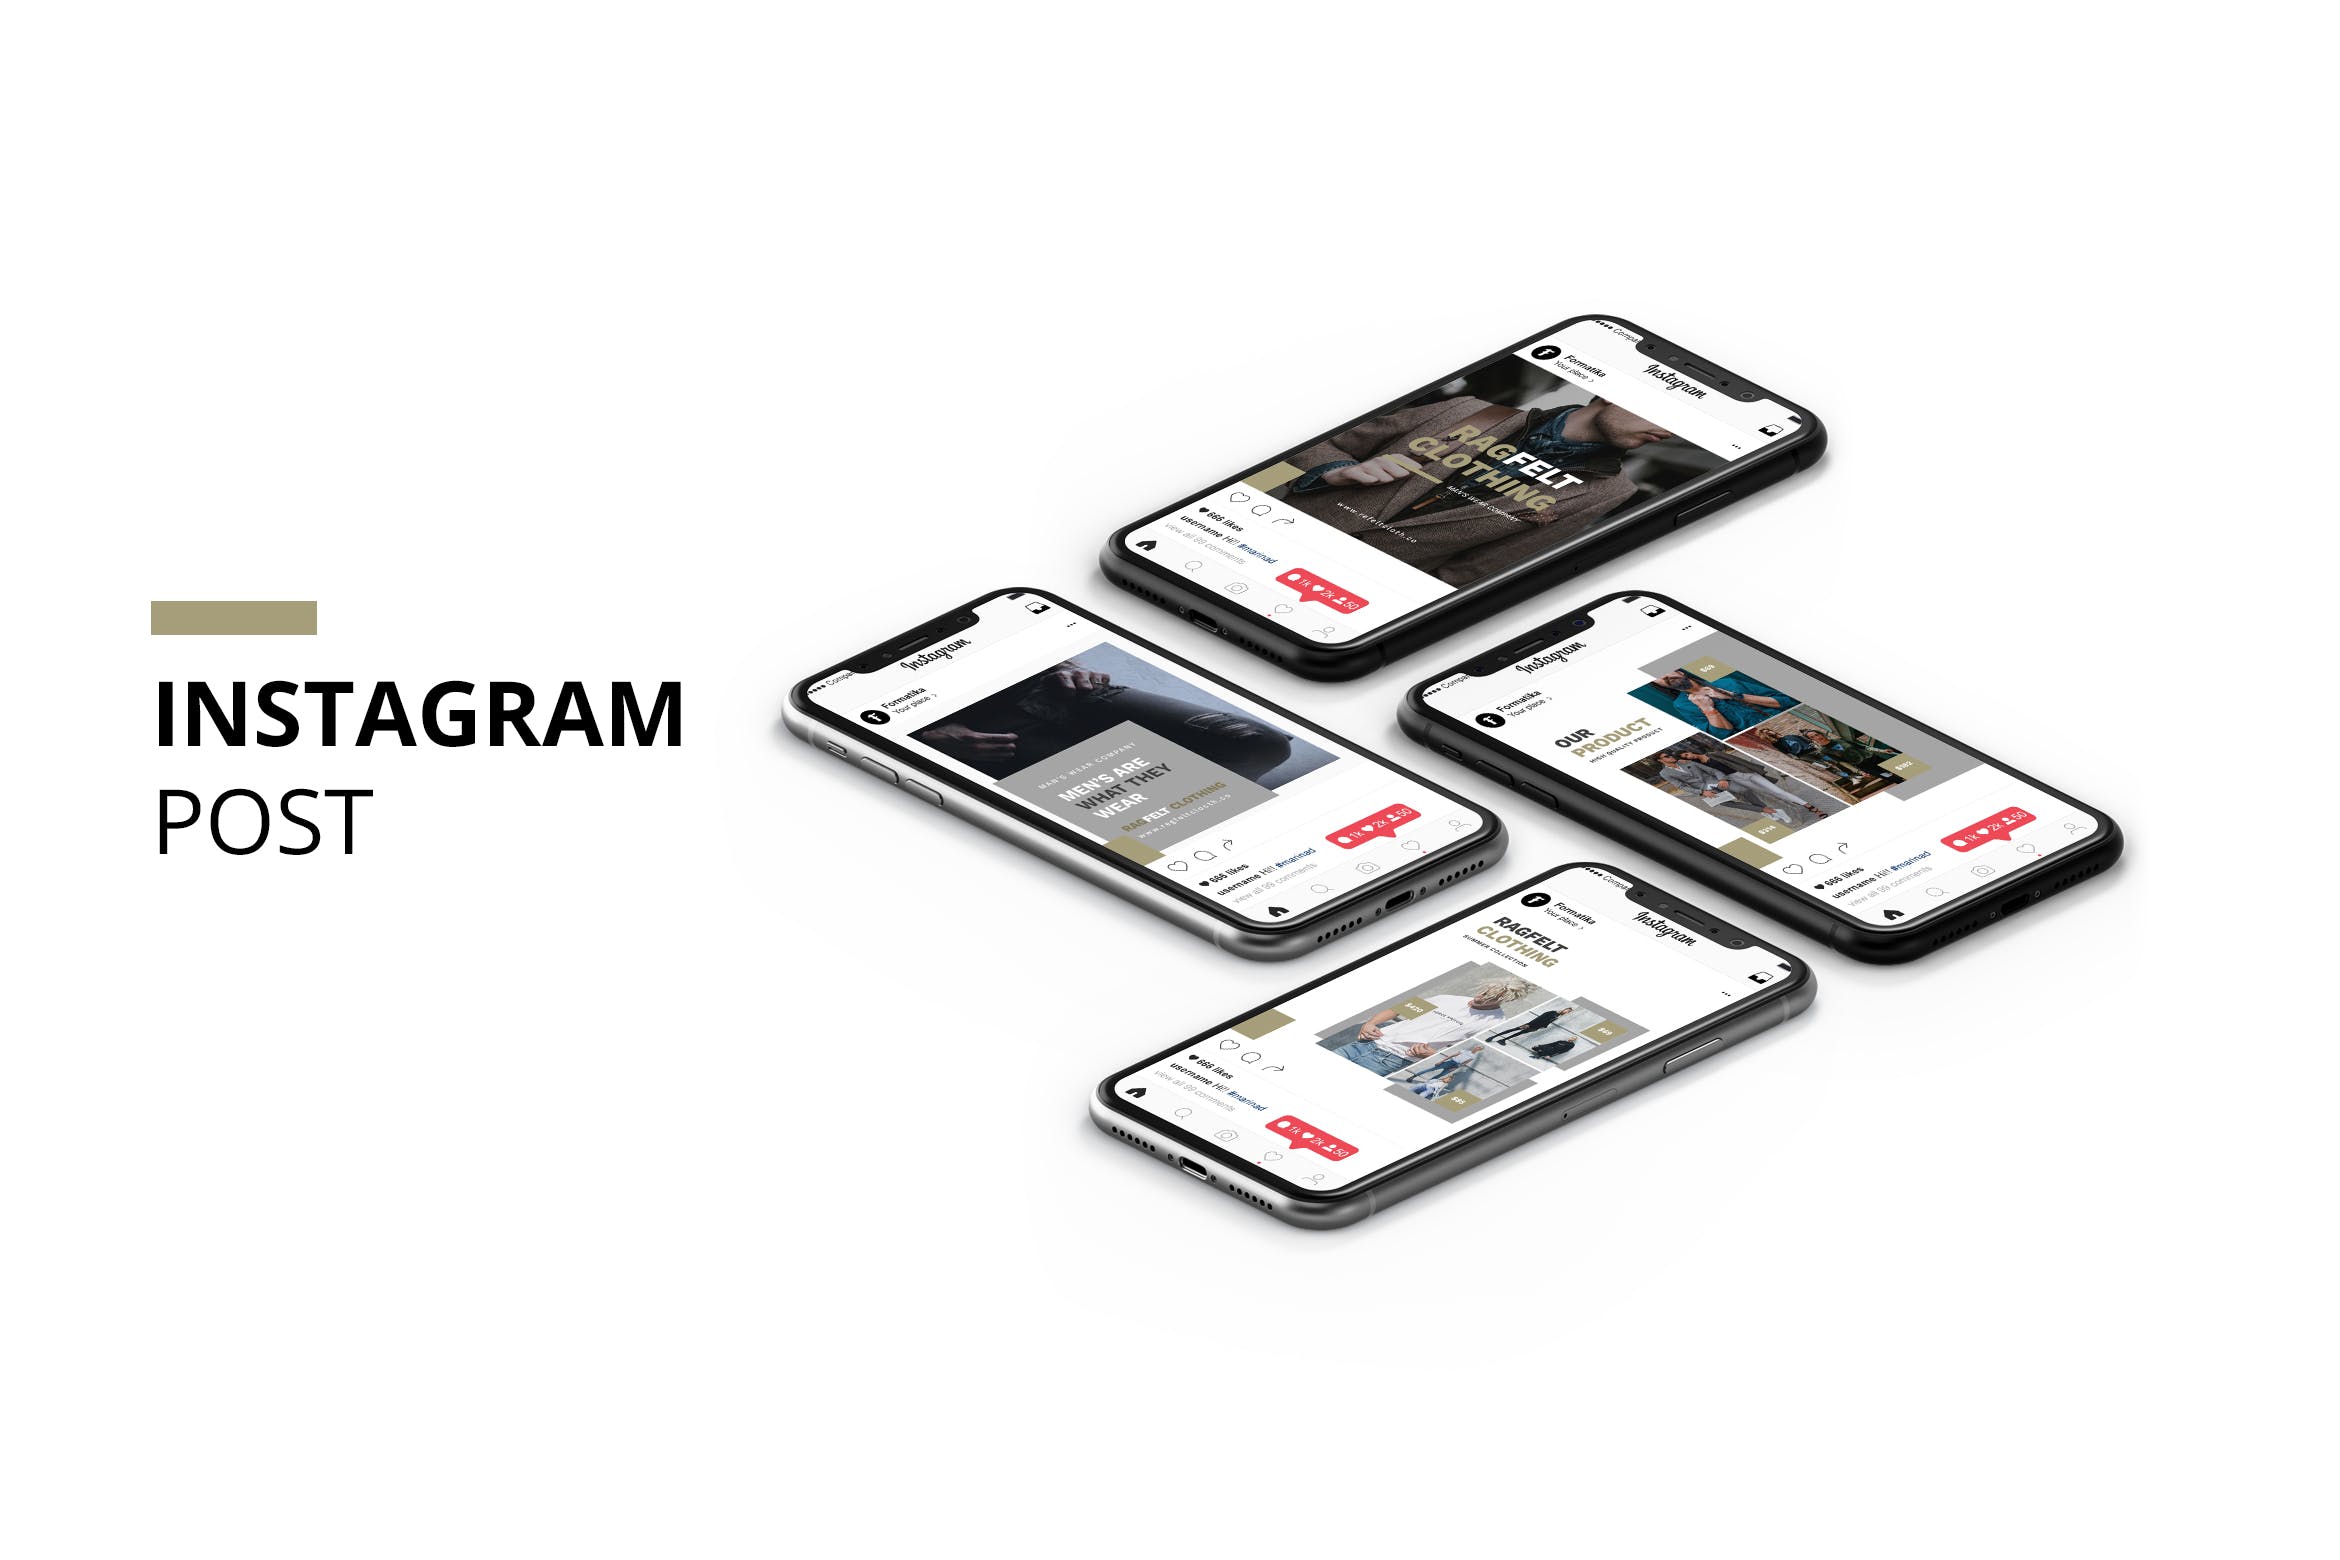 男装品牌推广Instagram贴图设计模板非凡图库精选 Ragfelt Man Fashion Instagram Post插图